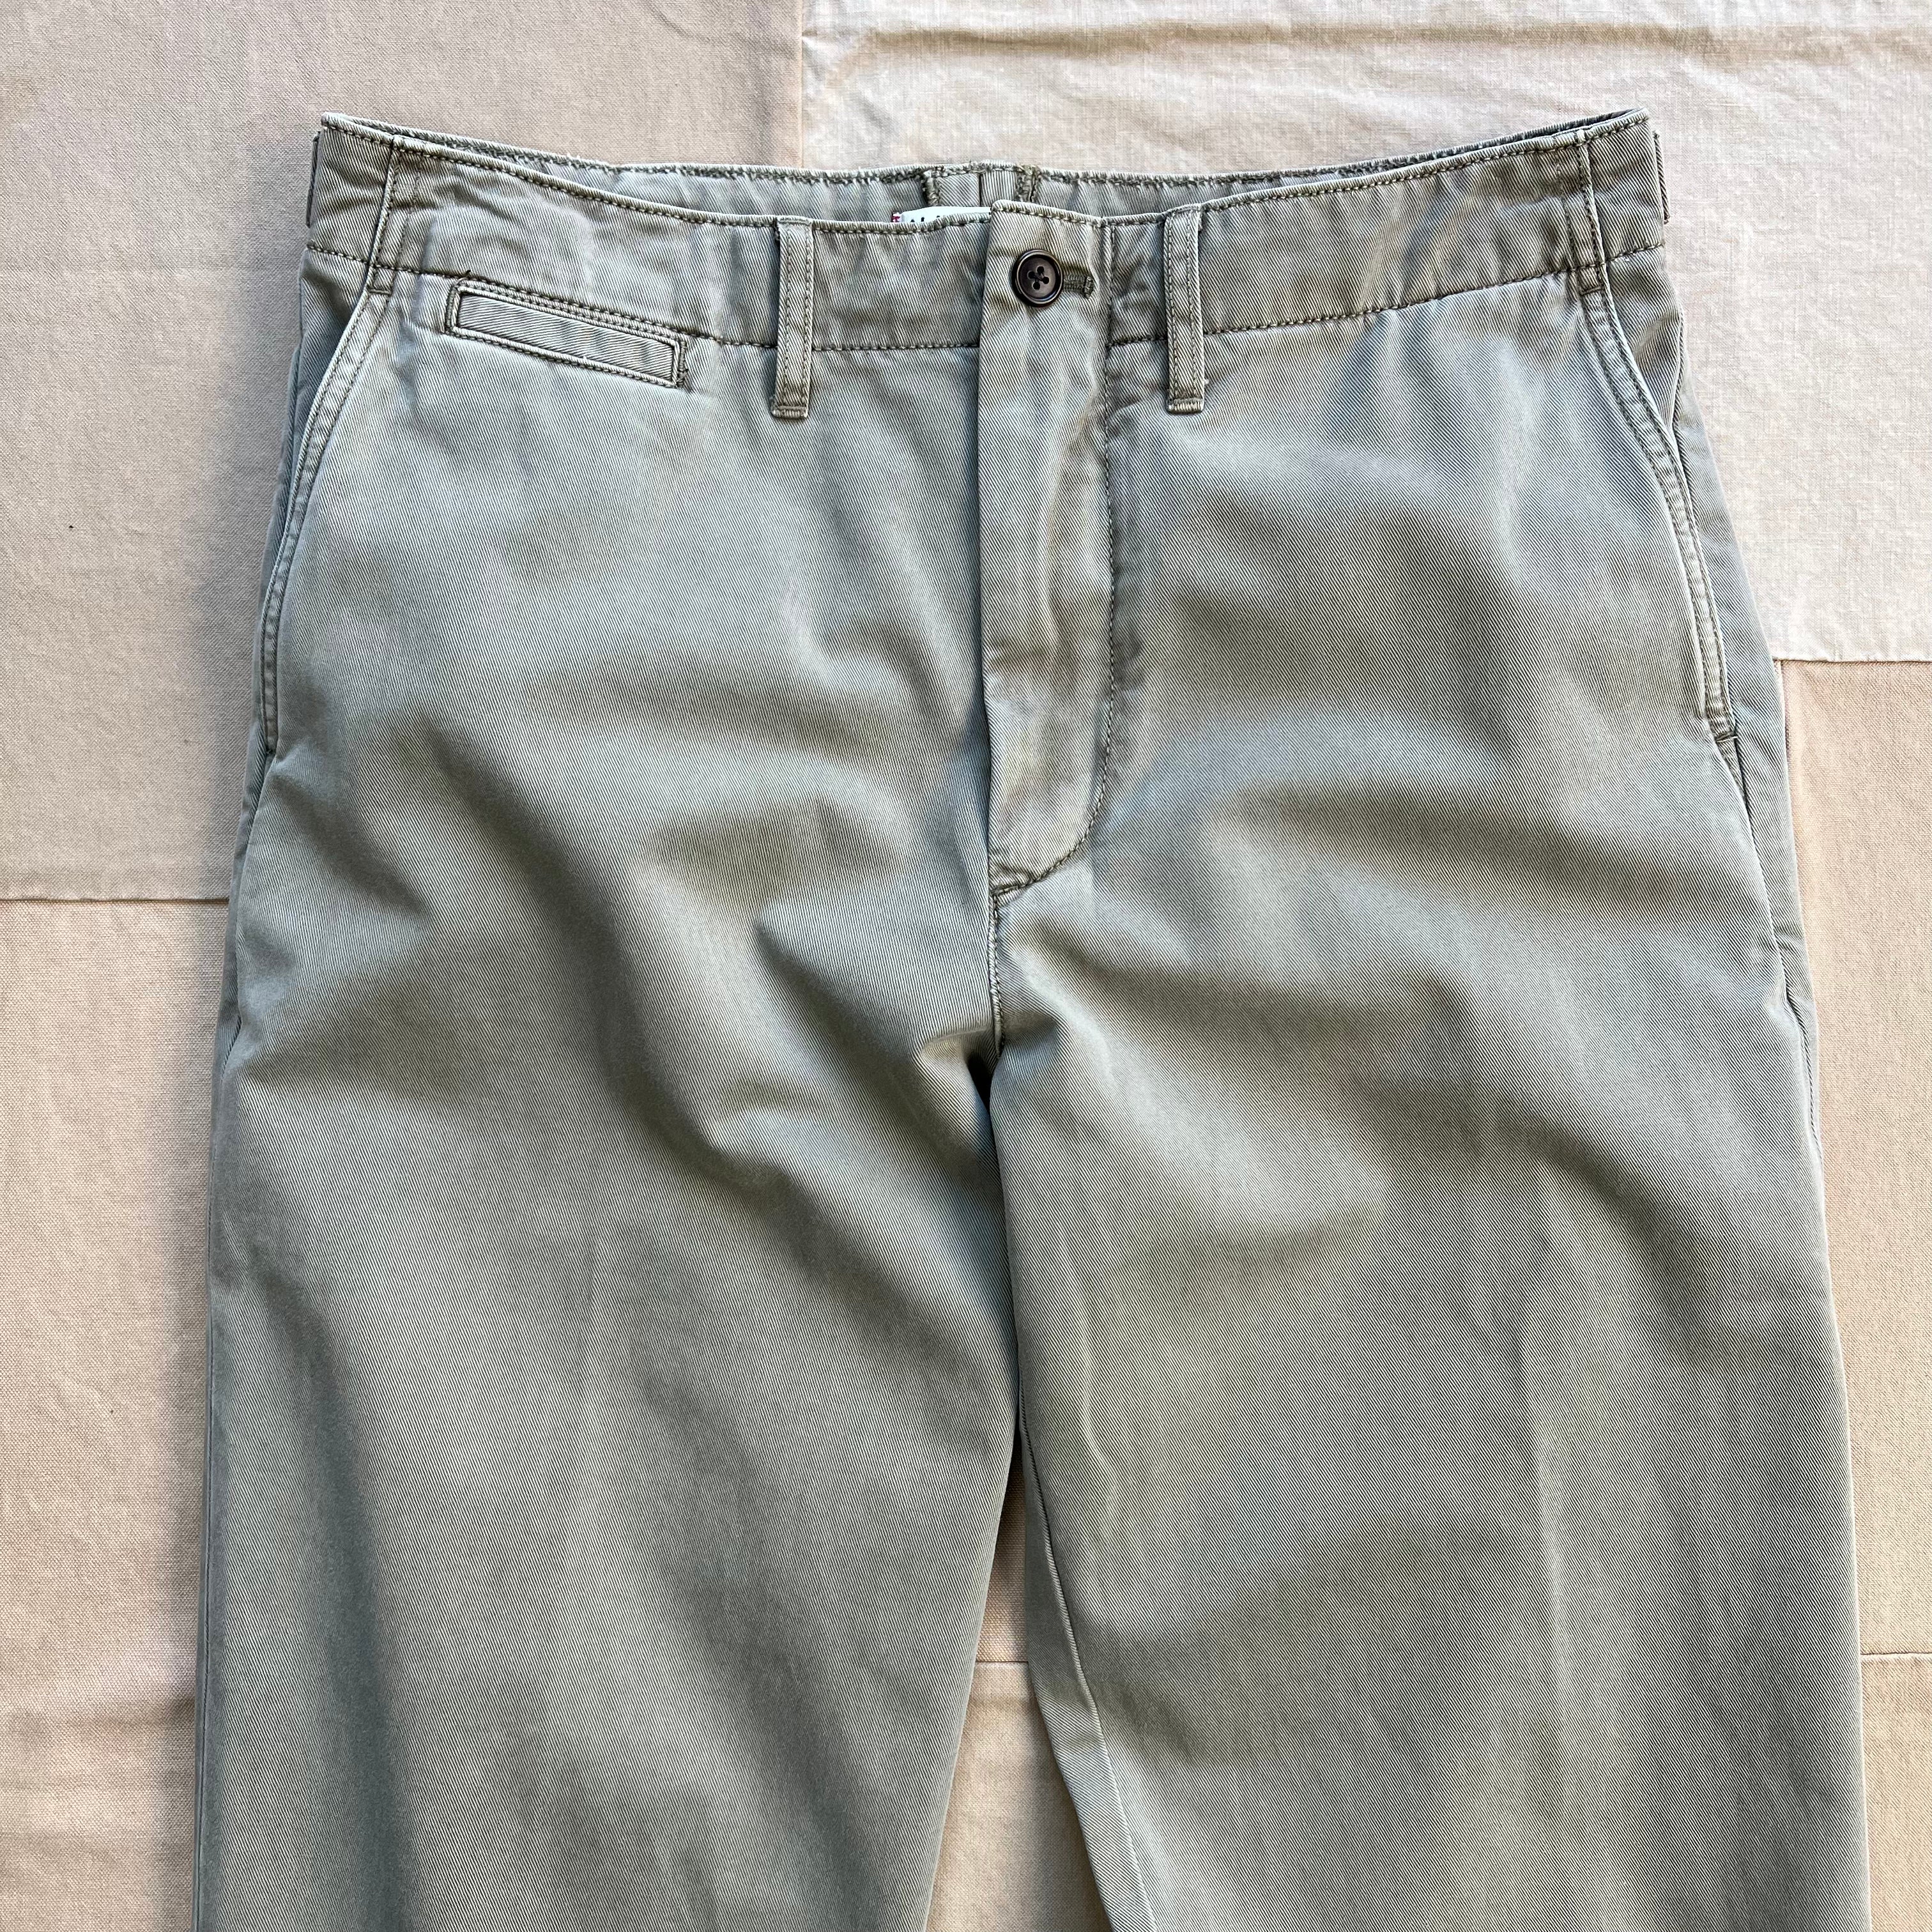 Straight Leg Pant in Vintage Wash Chino Long Inseam, Faded Khaki